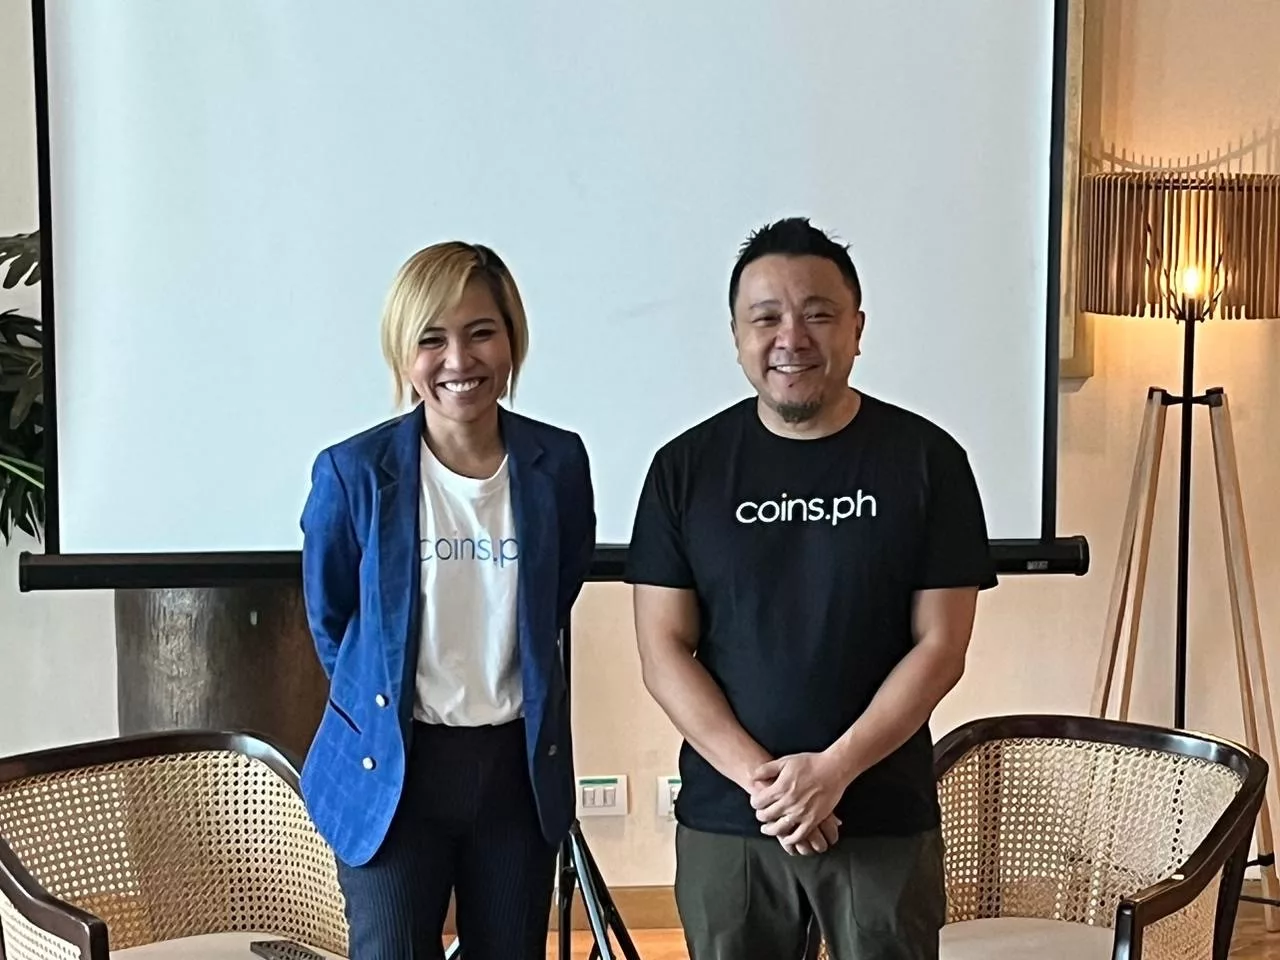 Jen Bilango together with Coin.ph CEO Wei Zhou